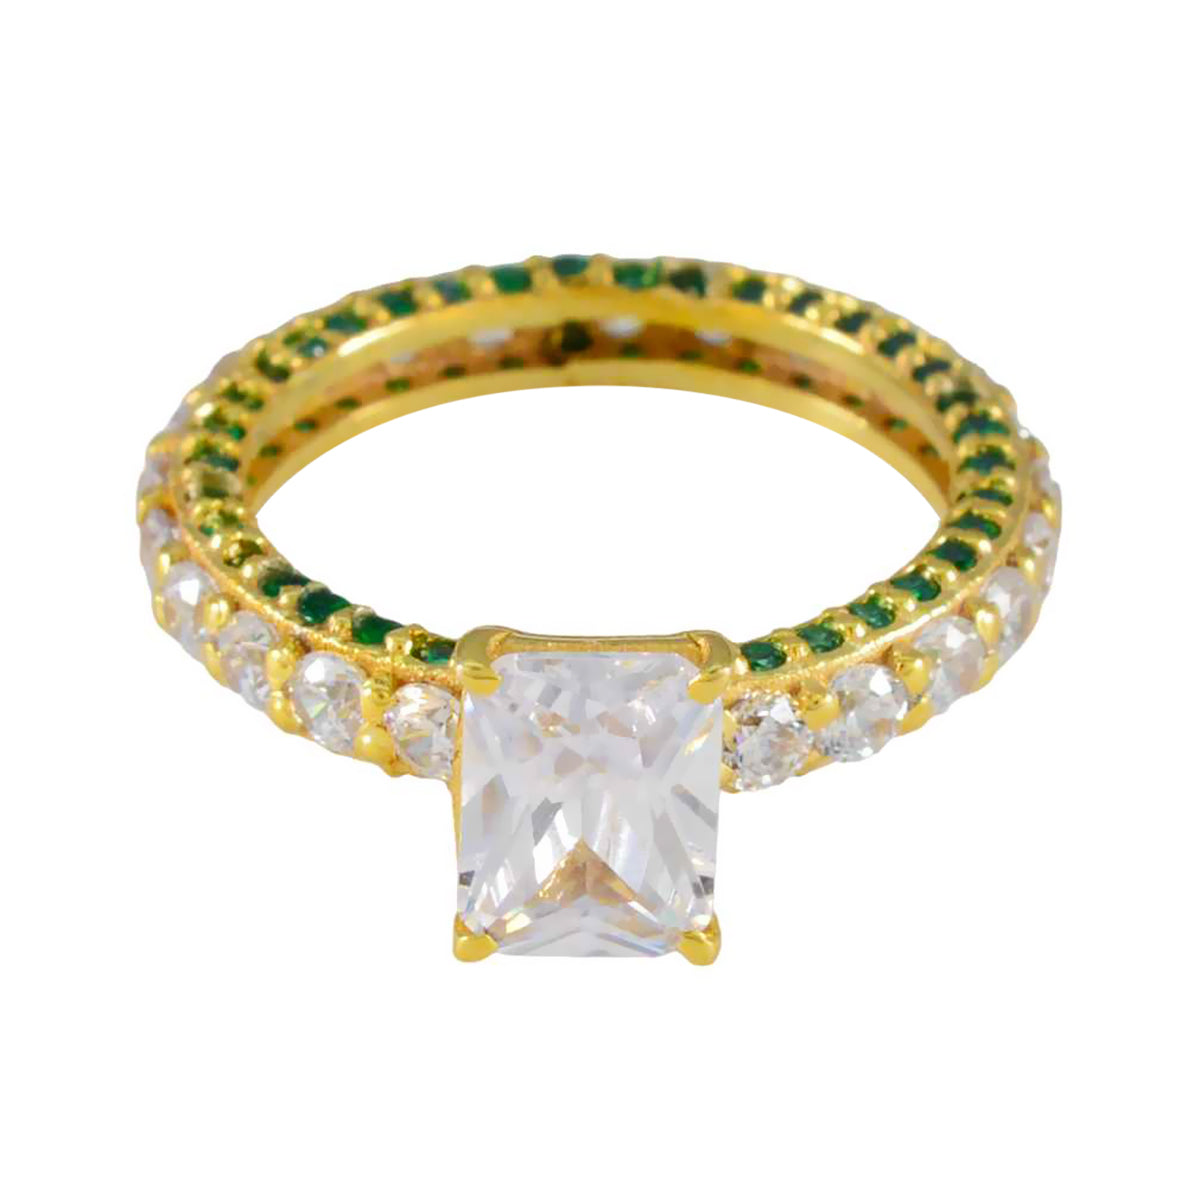 Riyo Gemstone Silver Ring With Yellow Gold Plating Emerald CZ Stone Octagon Shape Prong Setting Handamde Jewelry Black Friday Ring